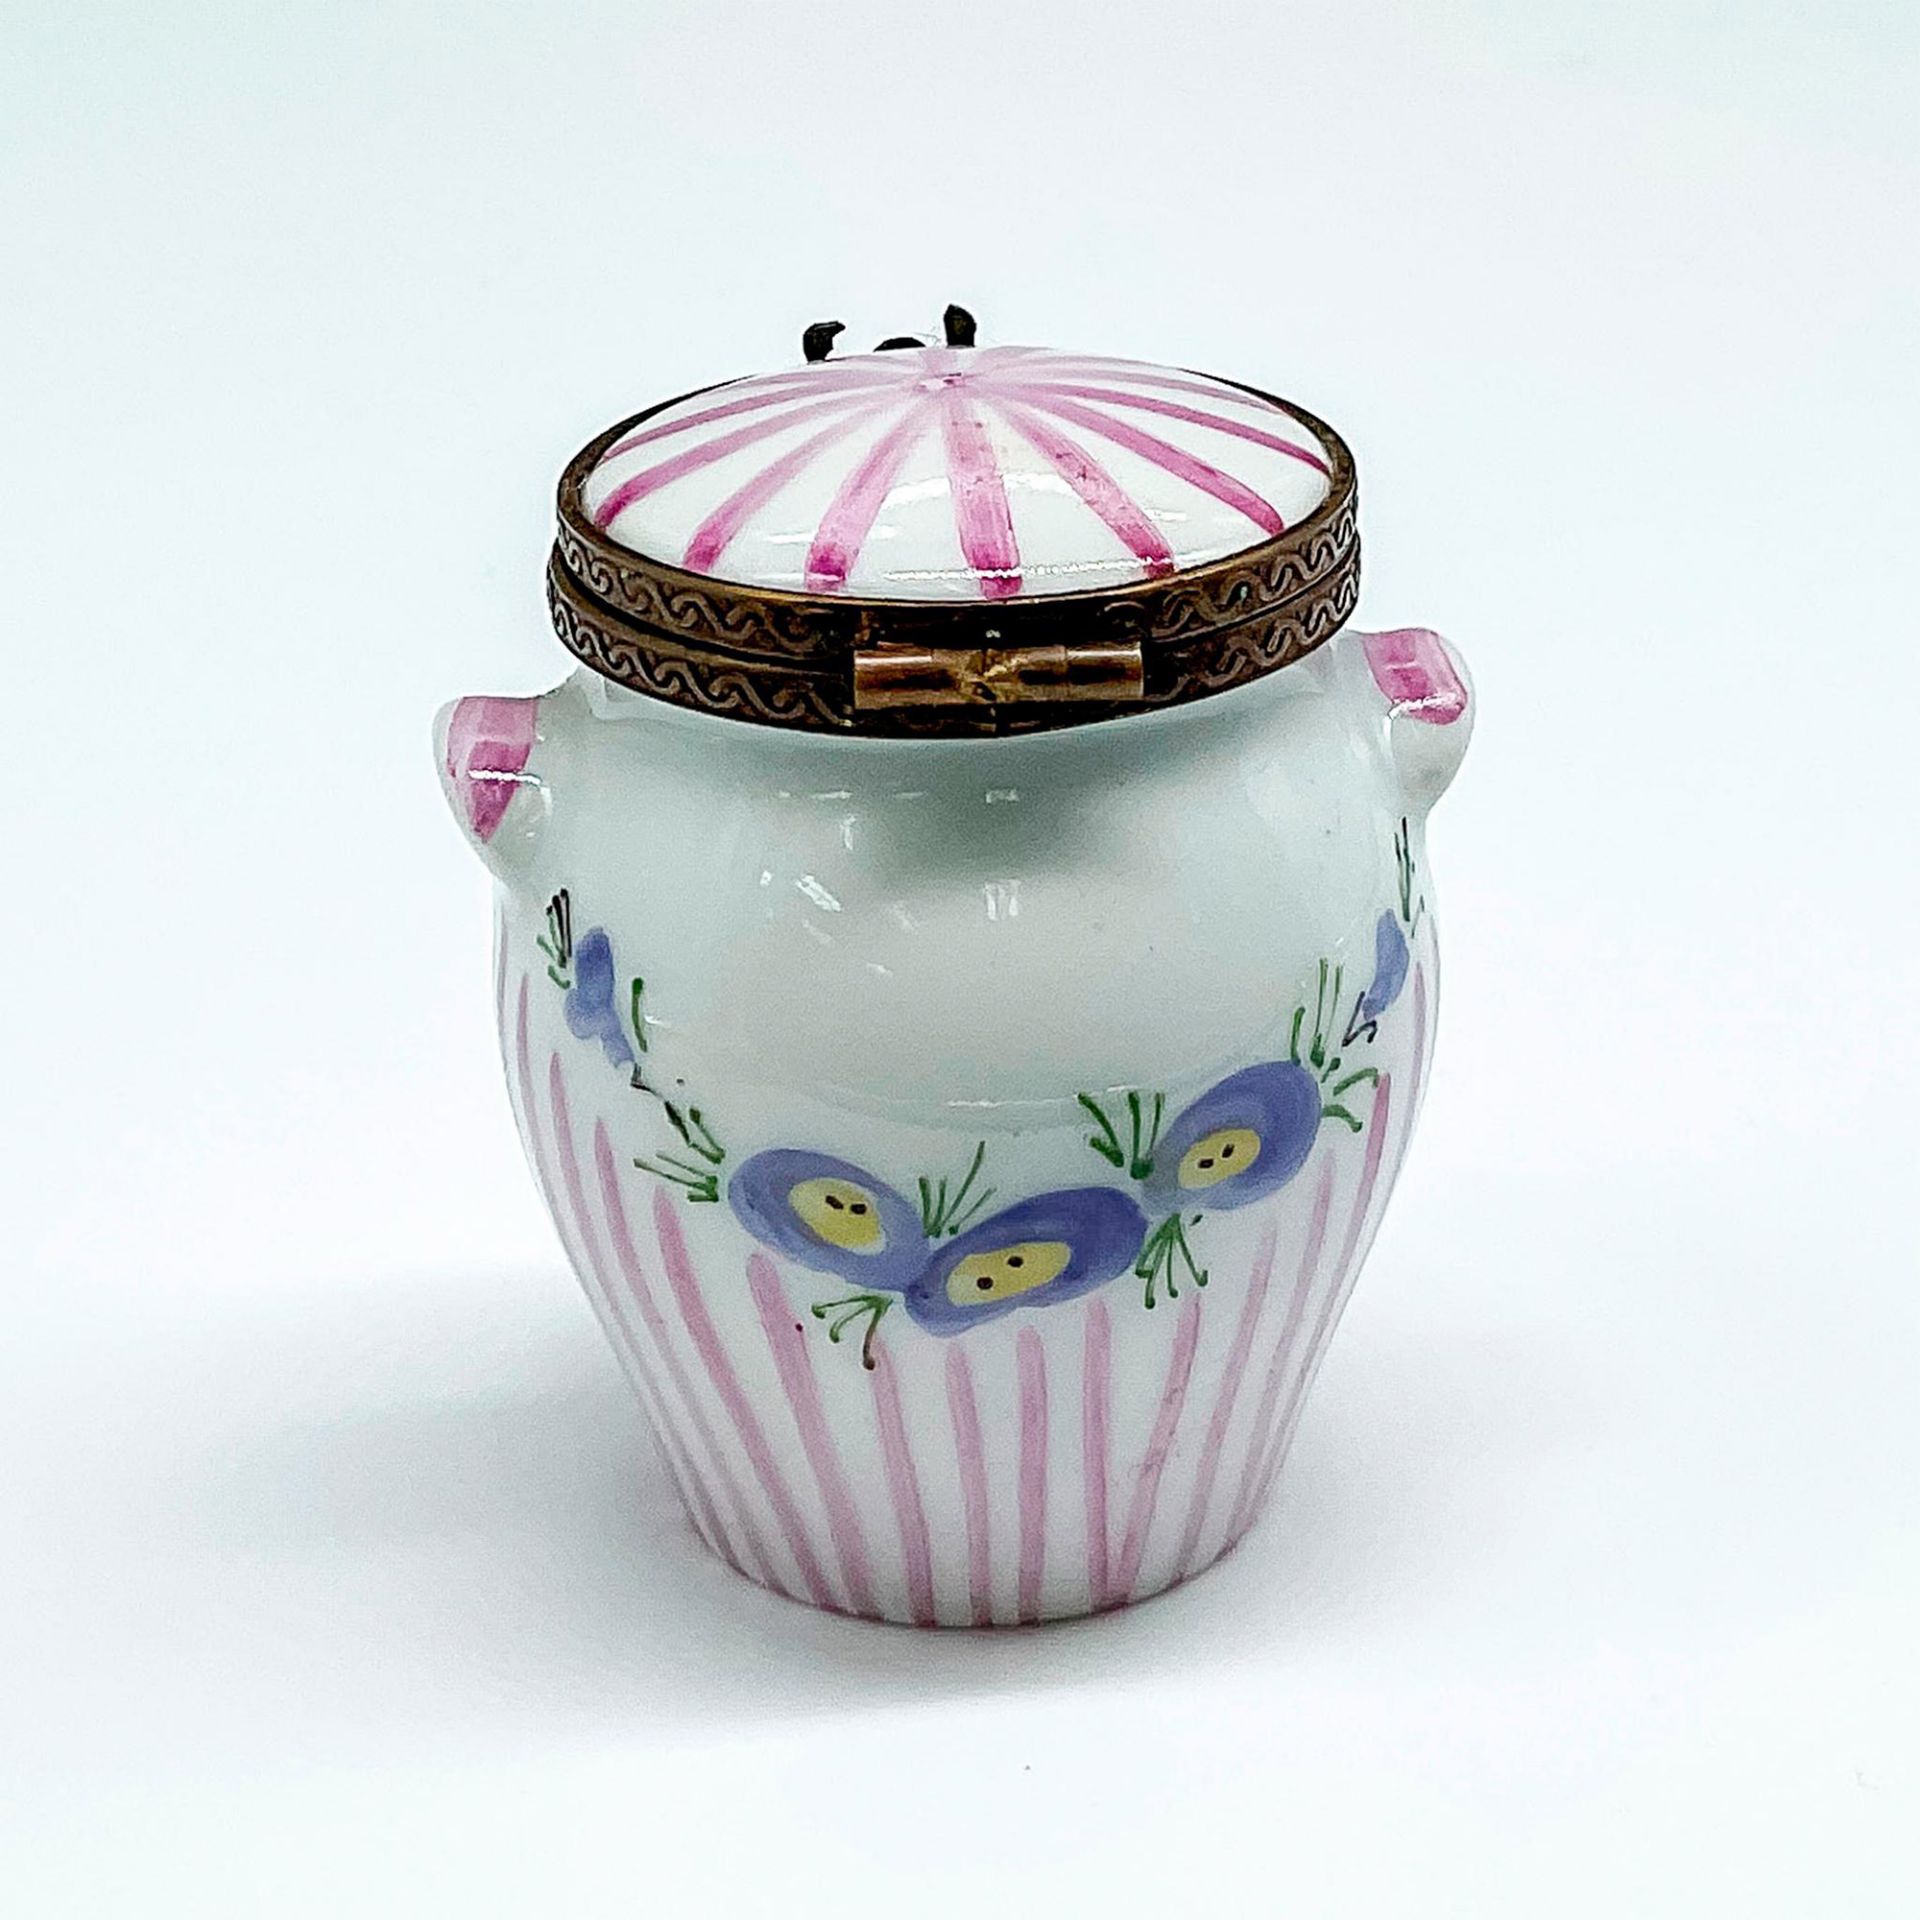 Limoges Porcelain Whimsical Trinket Box - Image 2 of 4